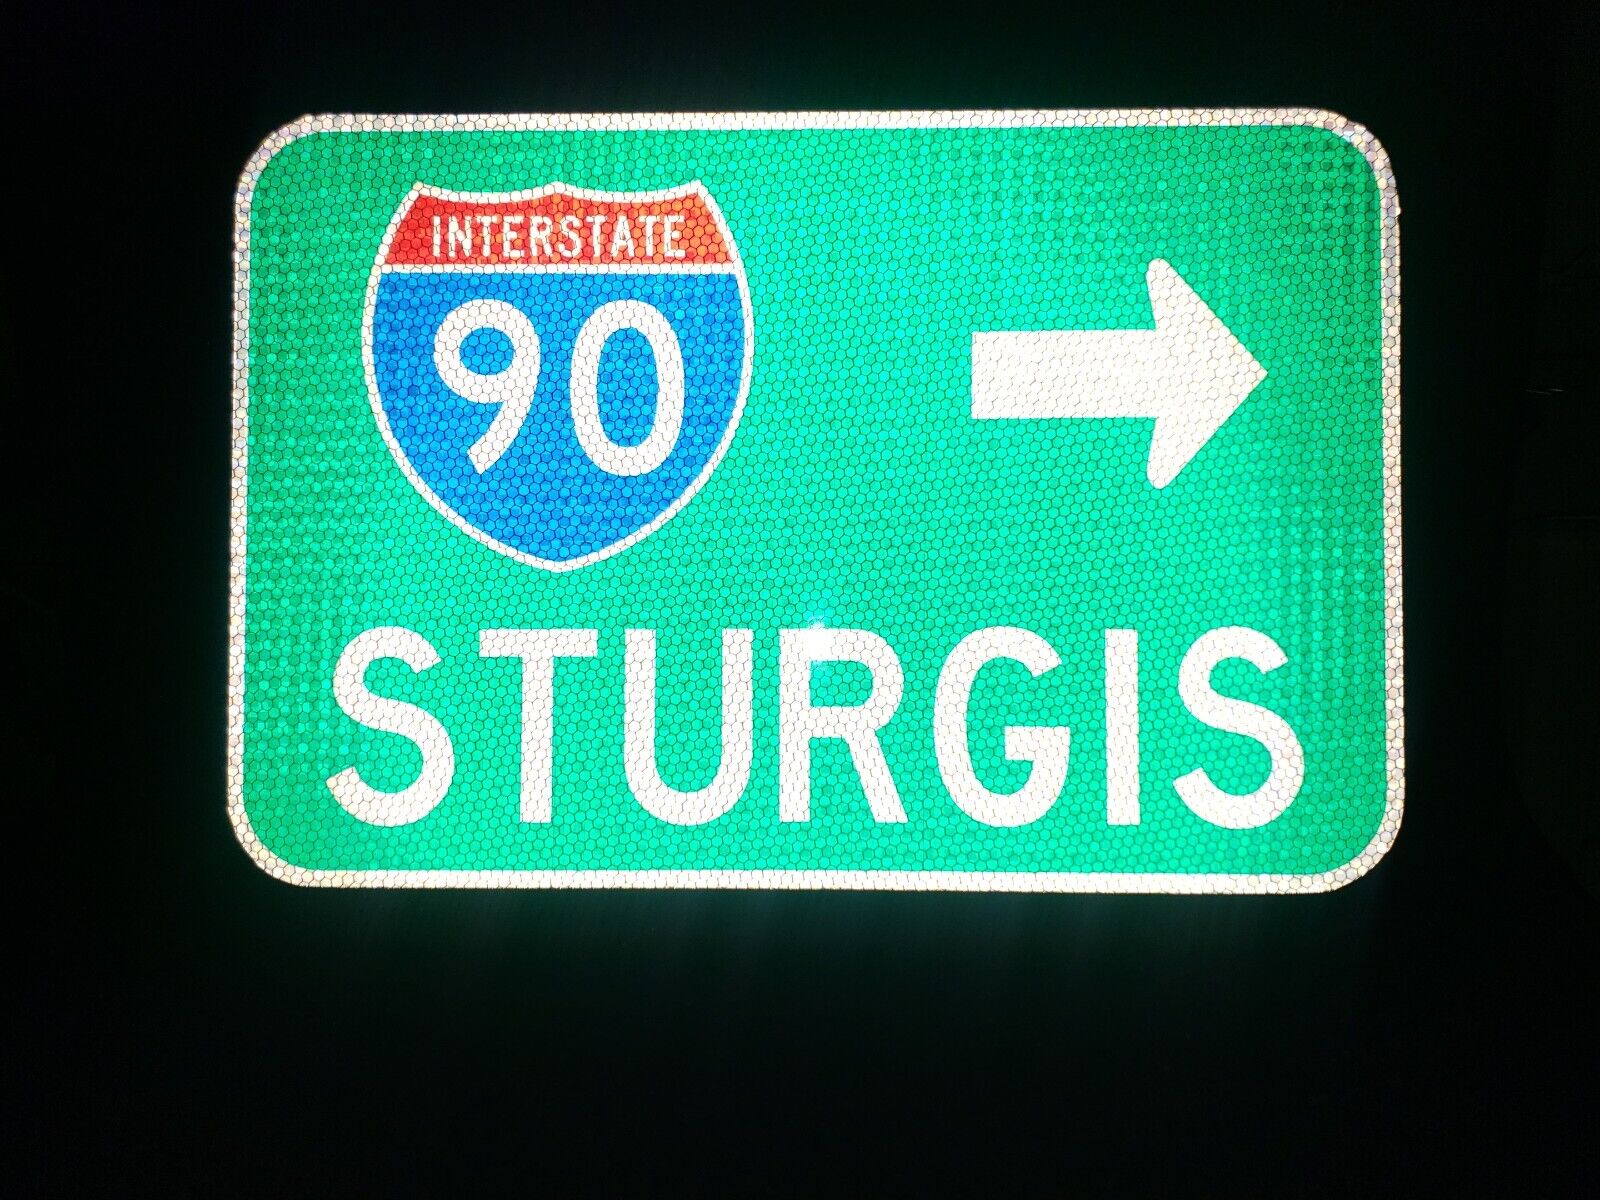 STURGIS Interstate 90 route road sign, South Dakota, Motorcycle, Harley Davidson